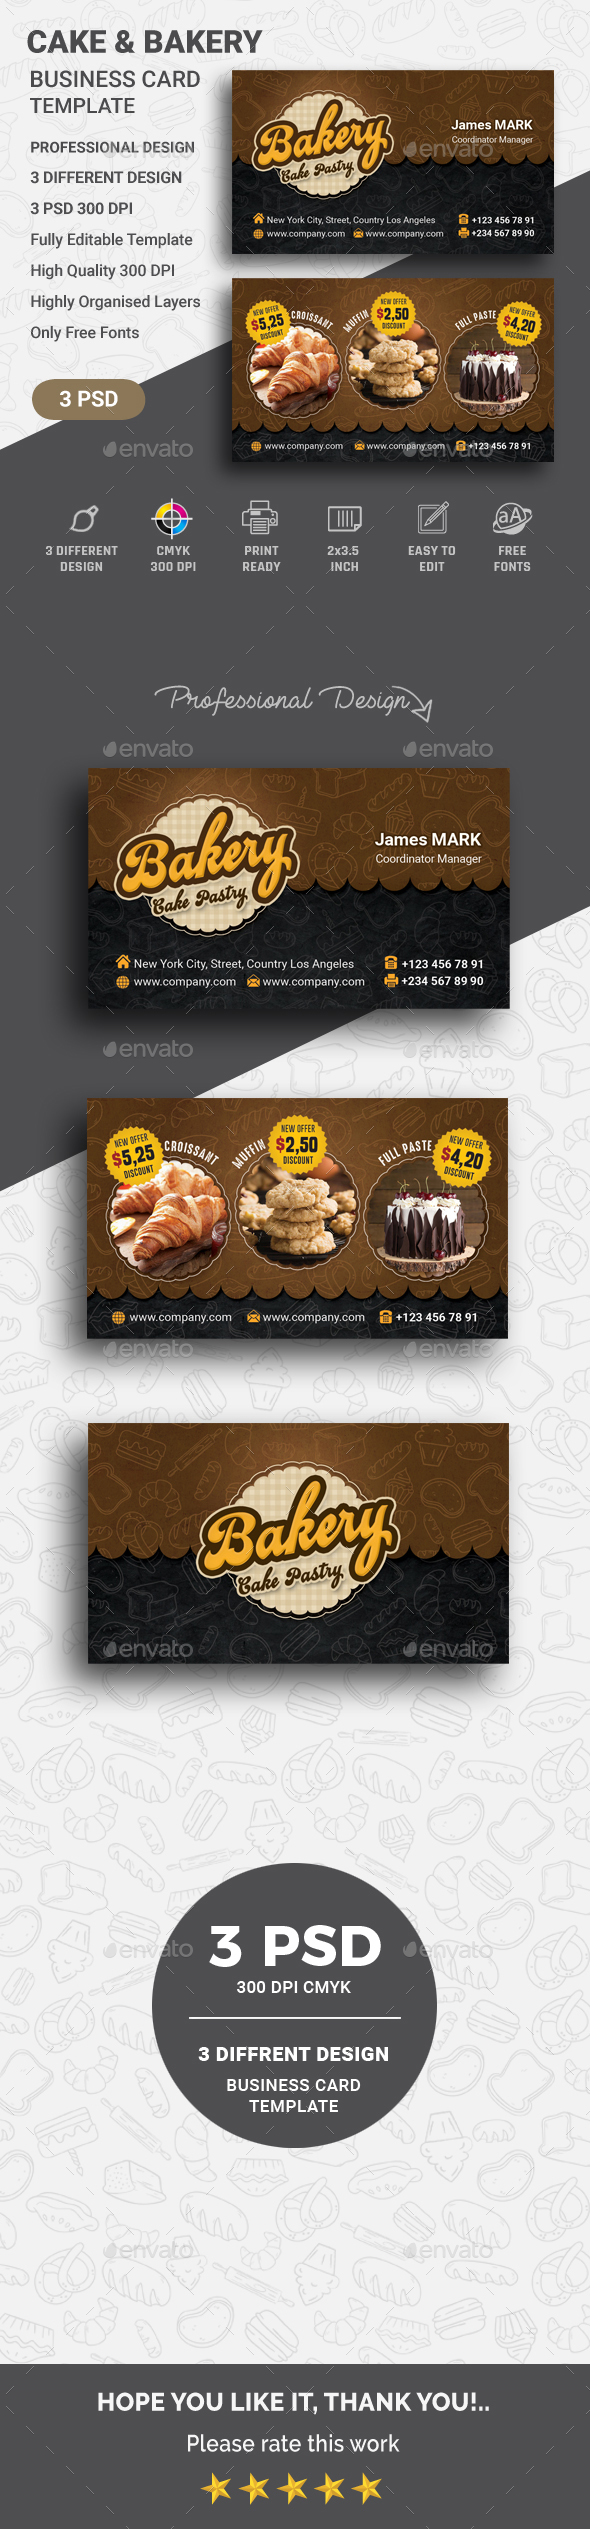 Simple Cartoon Cake Shop Bakery Dessert Dessert Business Universal Business  Card | PSD Free Download - Pikbest